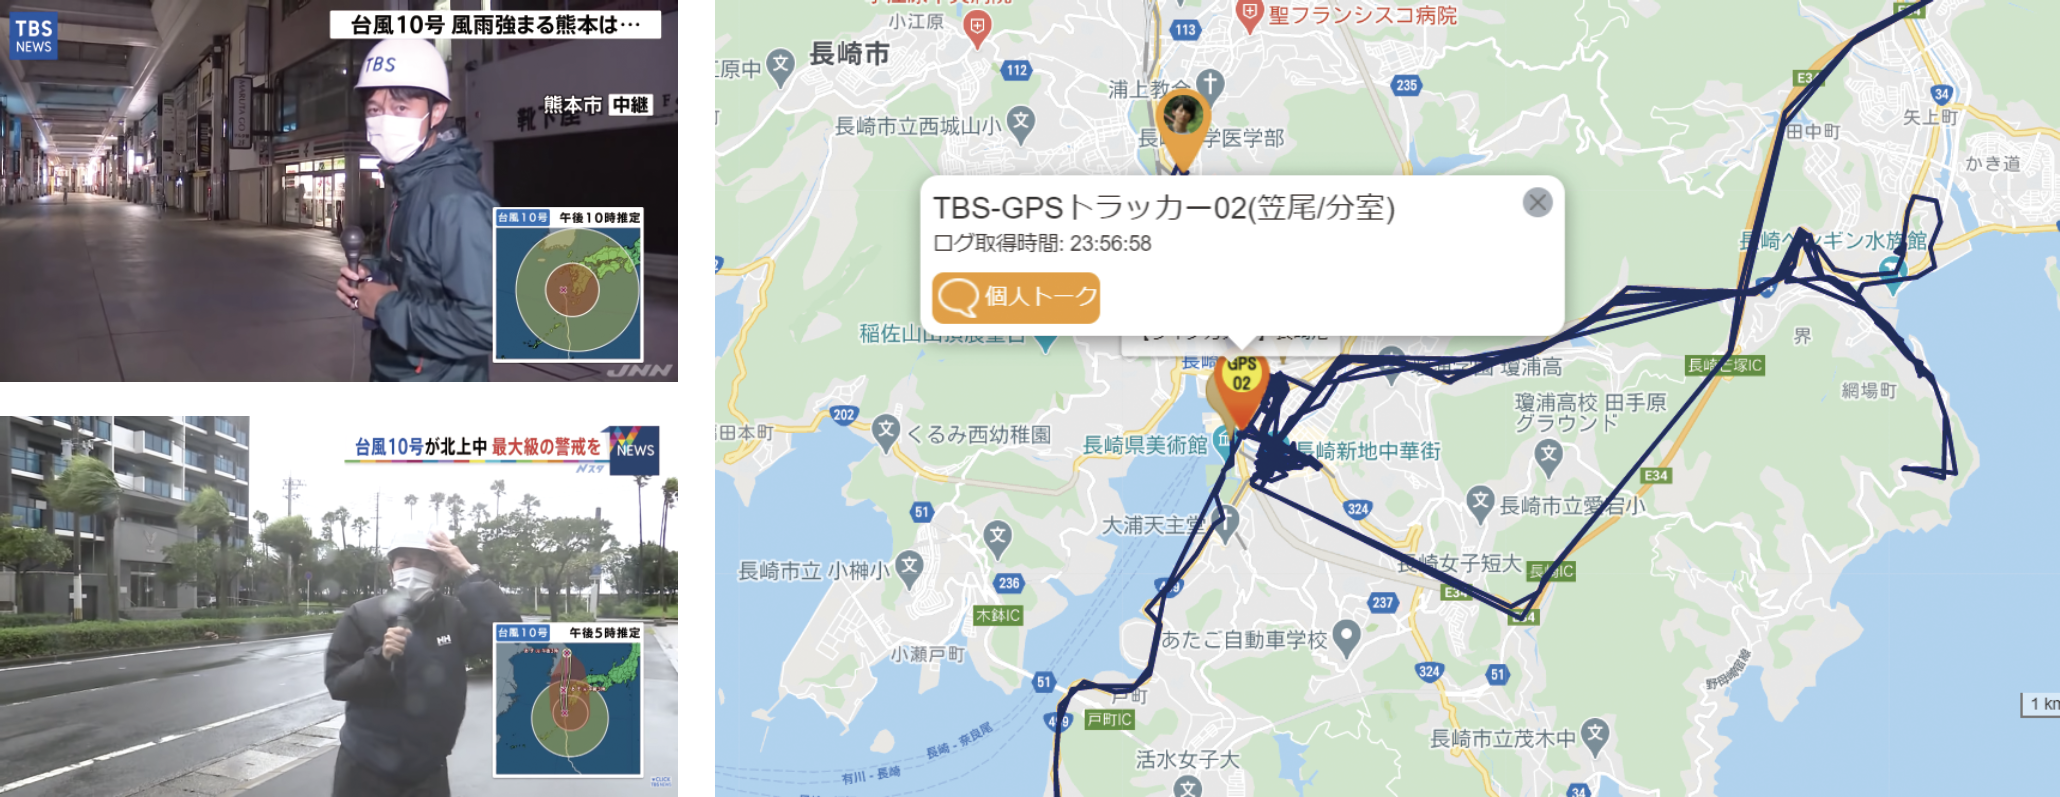 「Linkig Maps」×「GPS SLIM」を活用した主なユースケース2